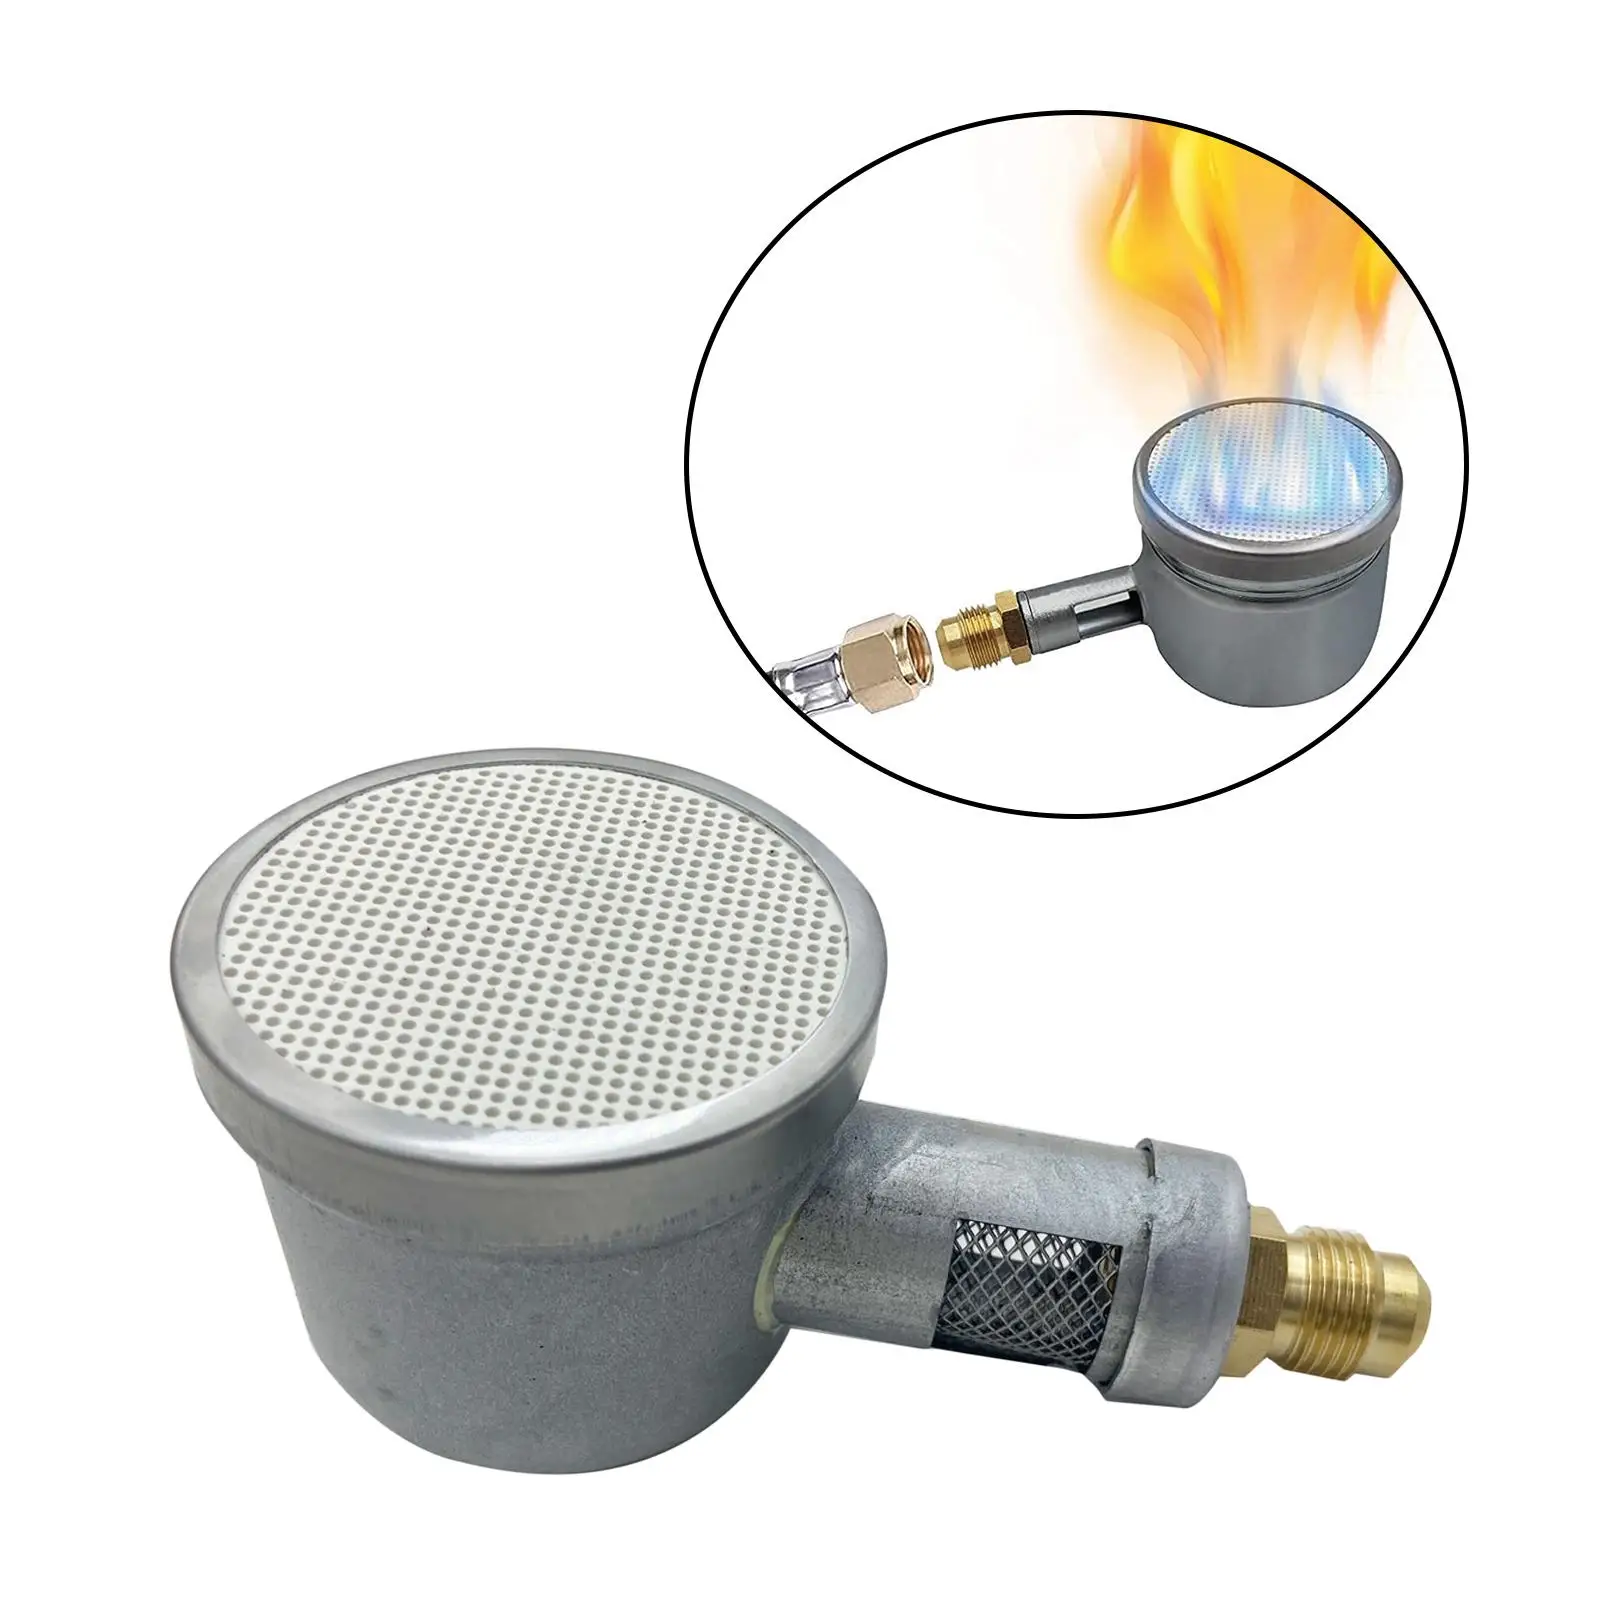 Portable Round Burner Head High Temperature Resistant for Outdoor Burner